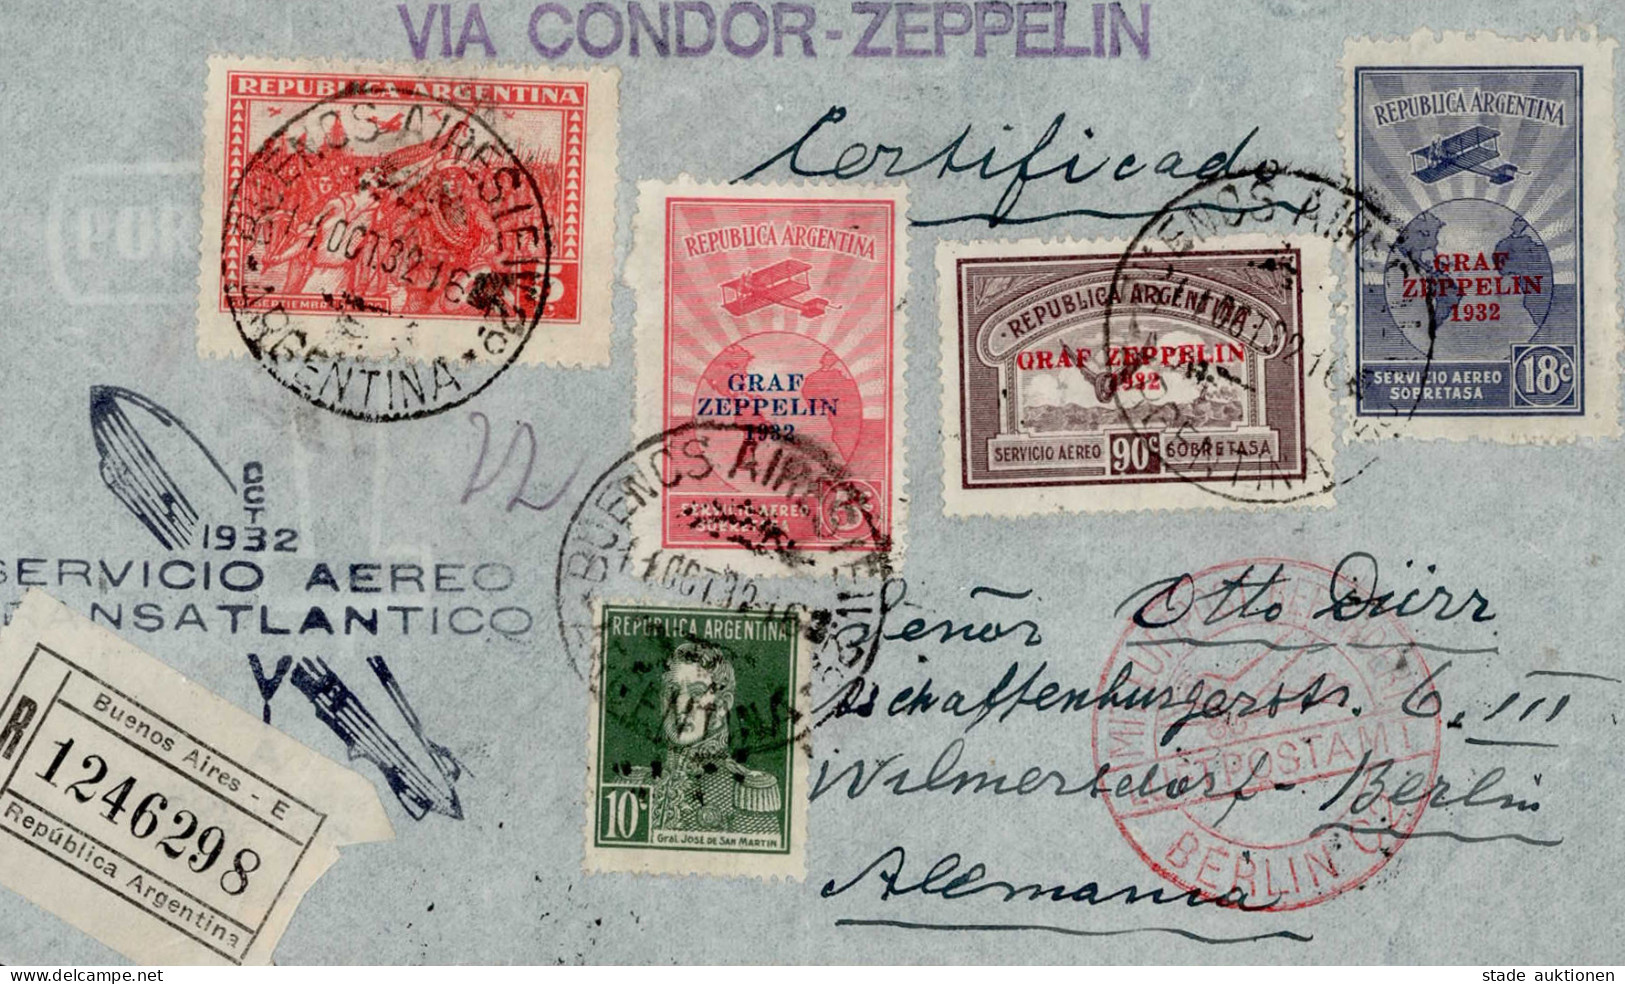 Zeppelin 8. Südamerikafahrt 1932 Argentinische Post Kpl. Satzfrankatur MiF Dirigeable - Dirigeables